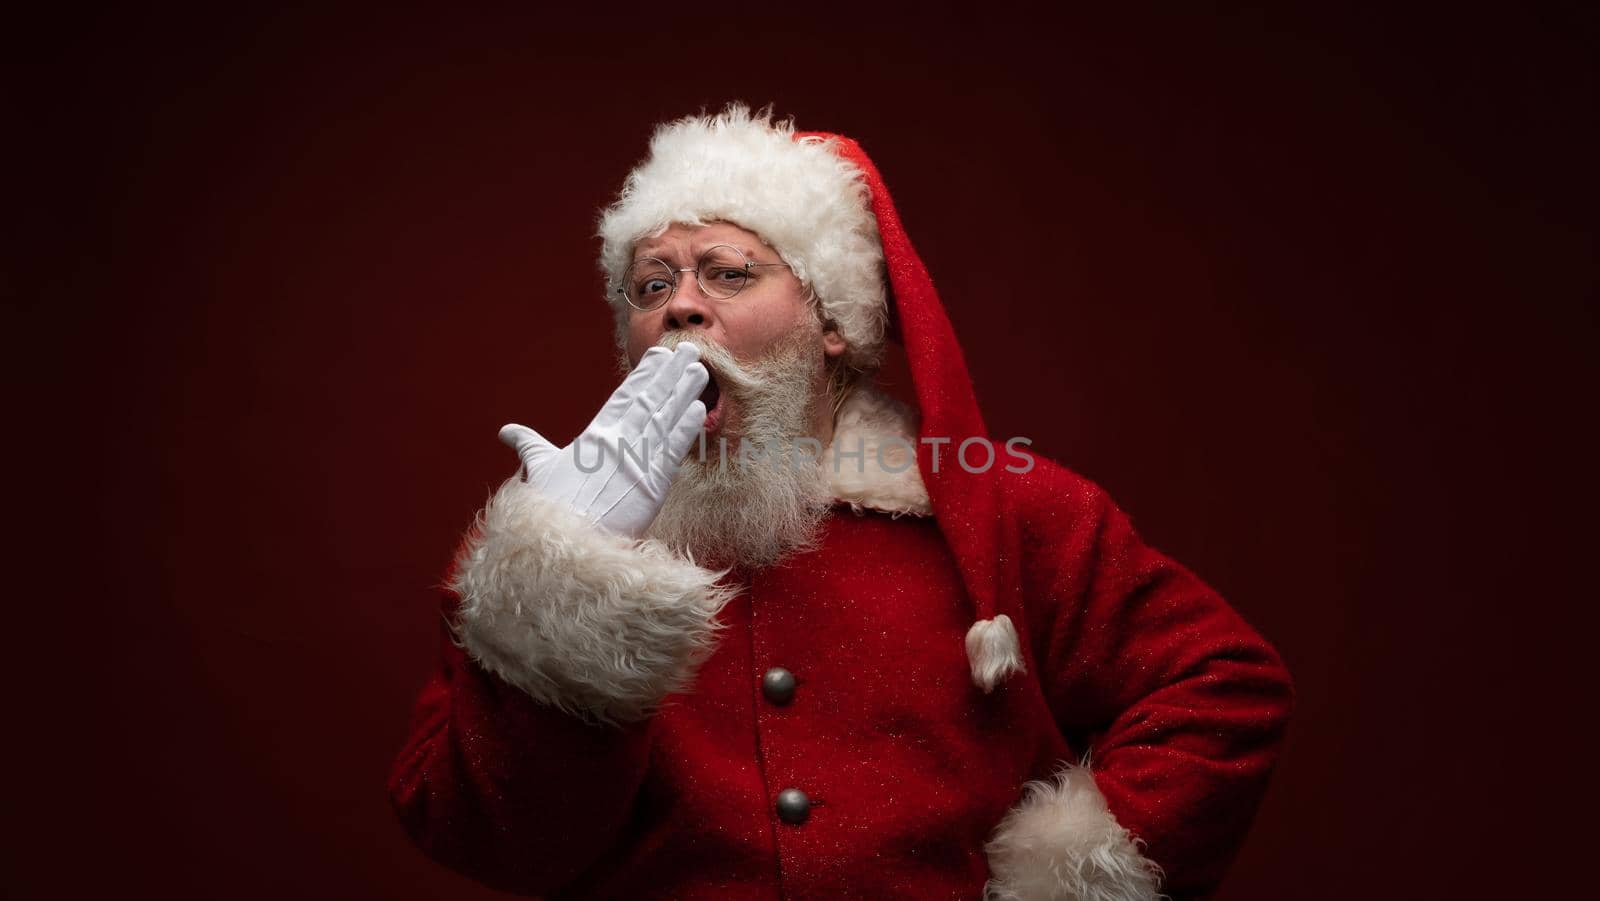 Sleepy Santa Claus yawning, wearing glasses and hat.